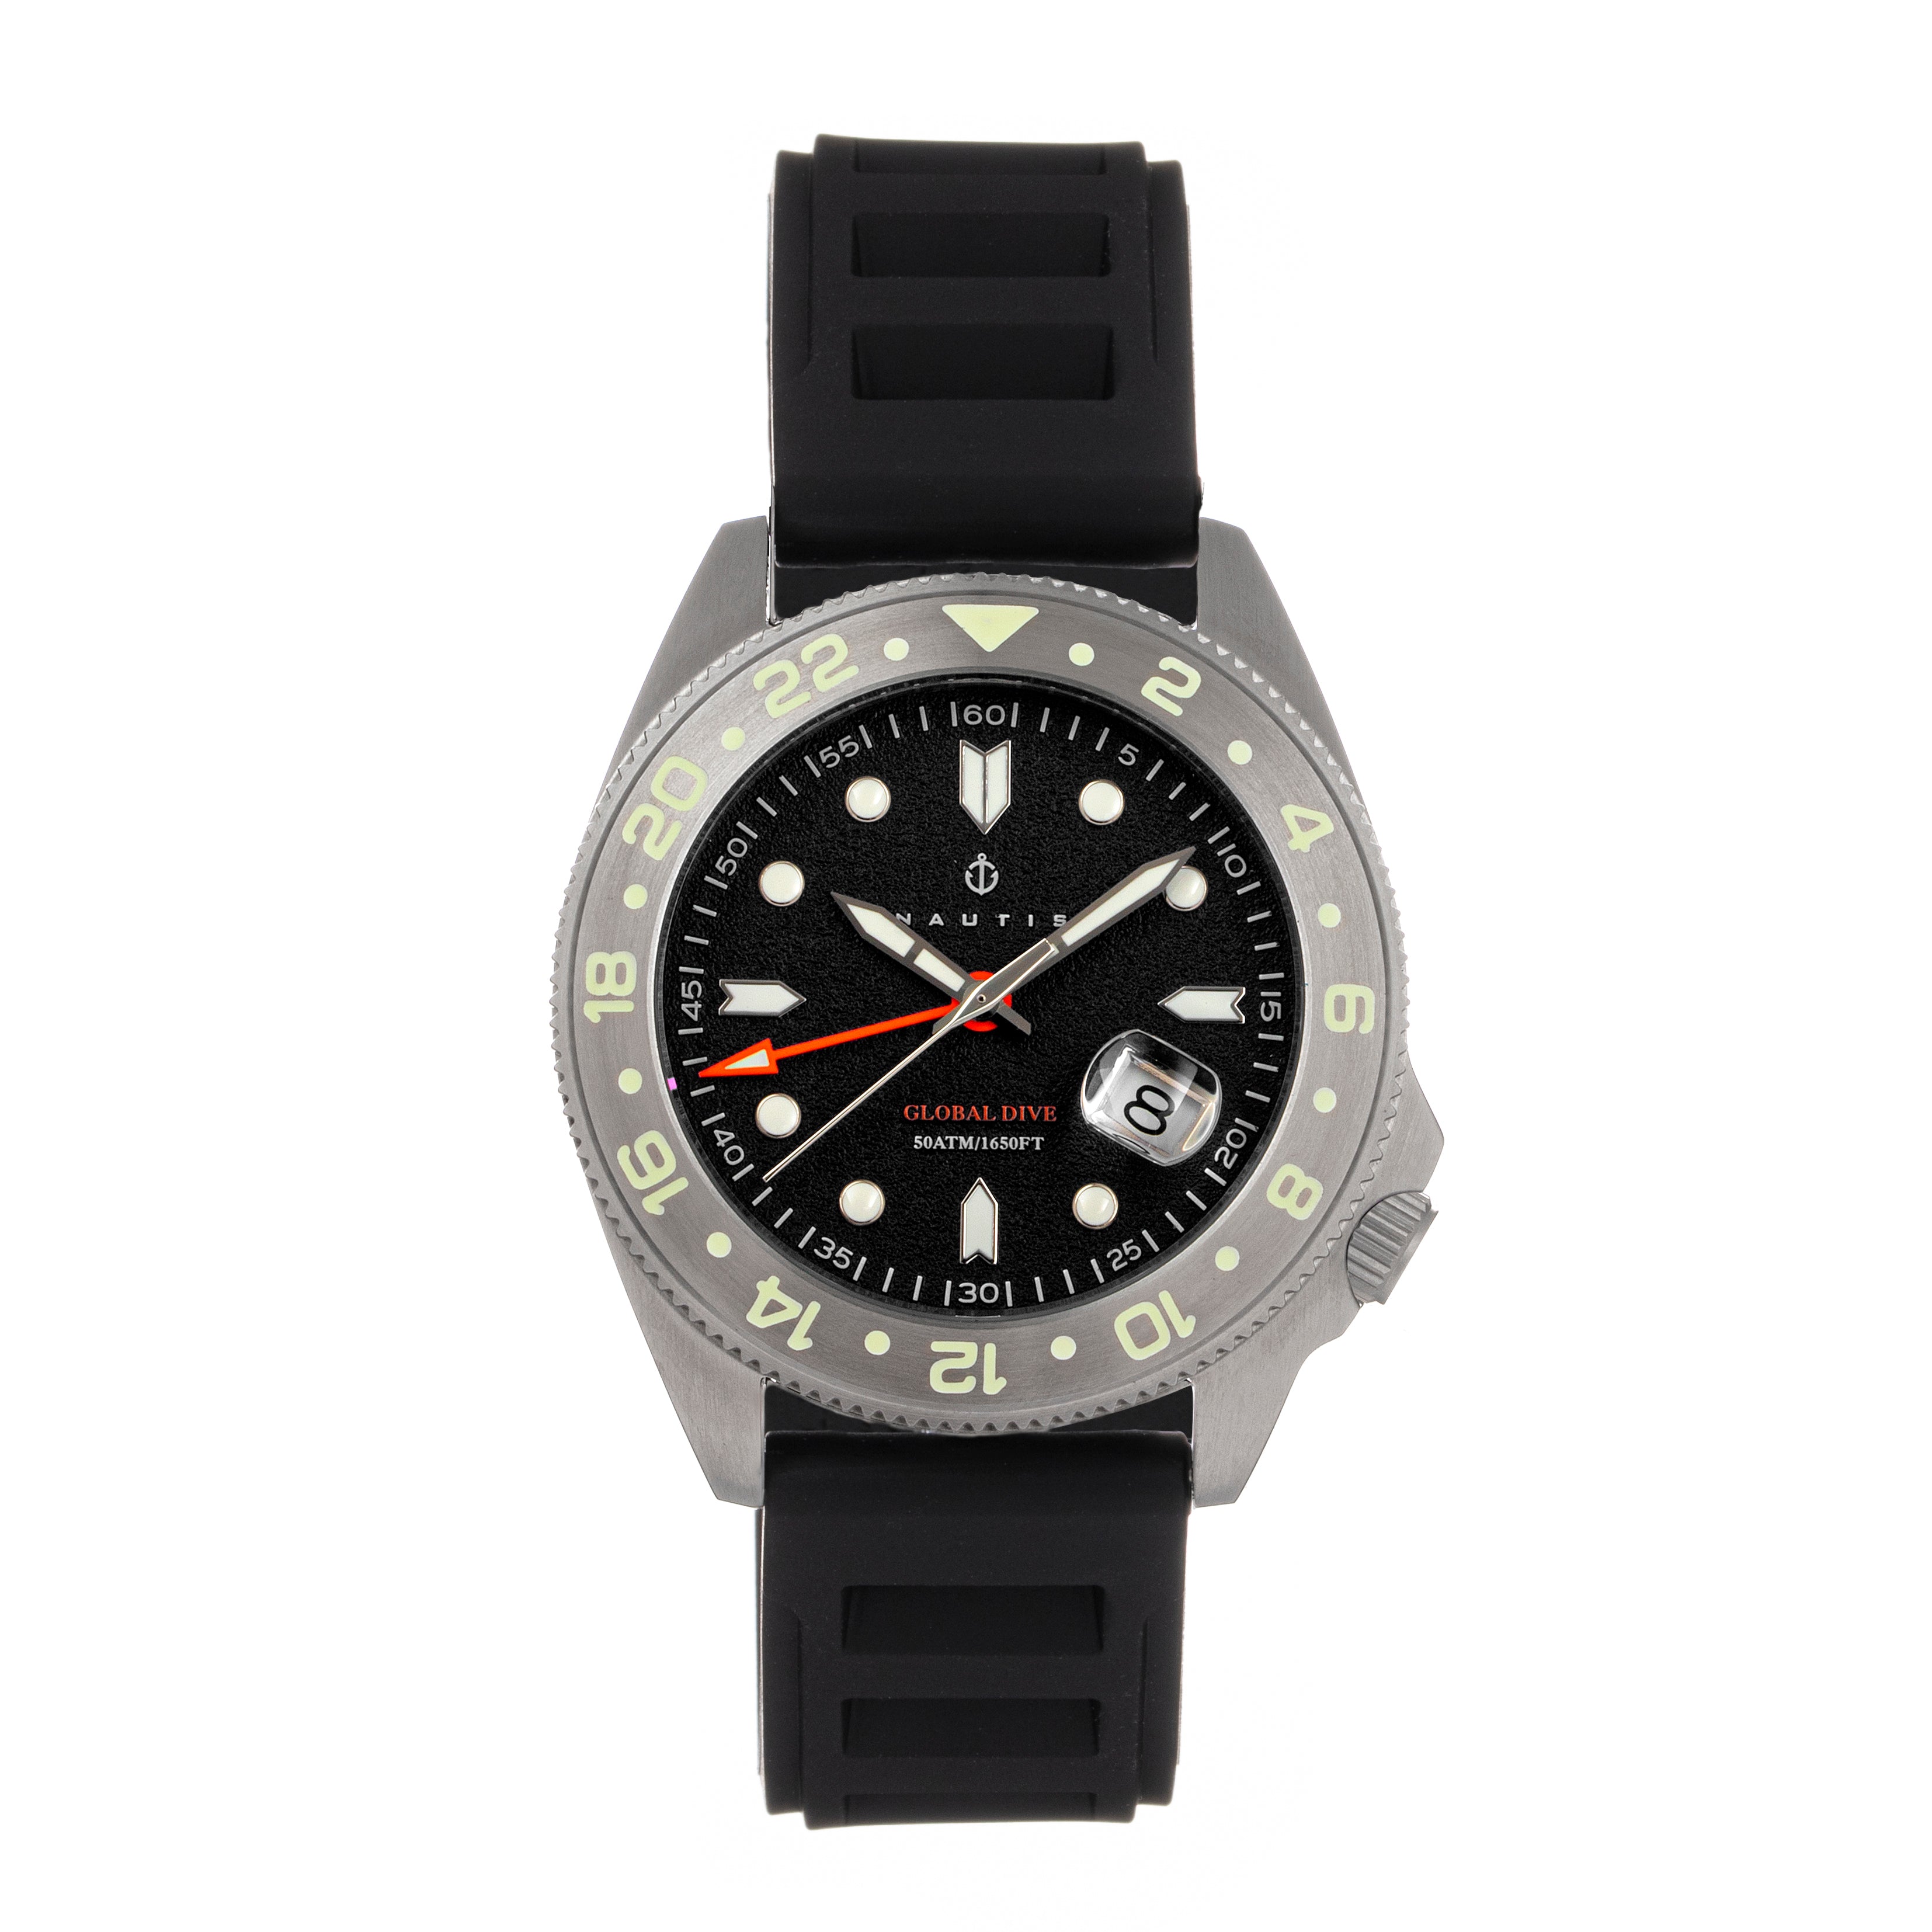 Nautis Global Dive Rubber-Strap Watch w/Date - Black - 18093R-C